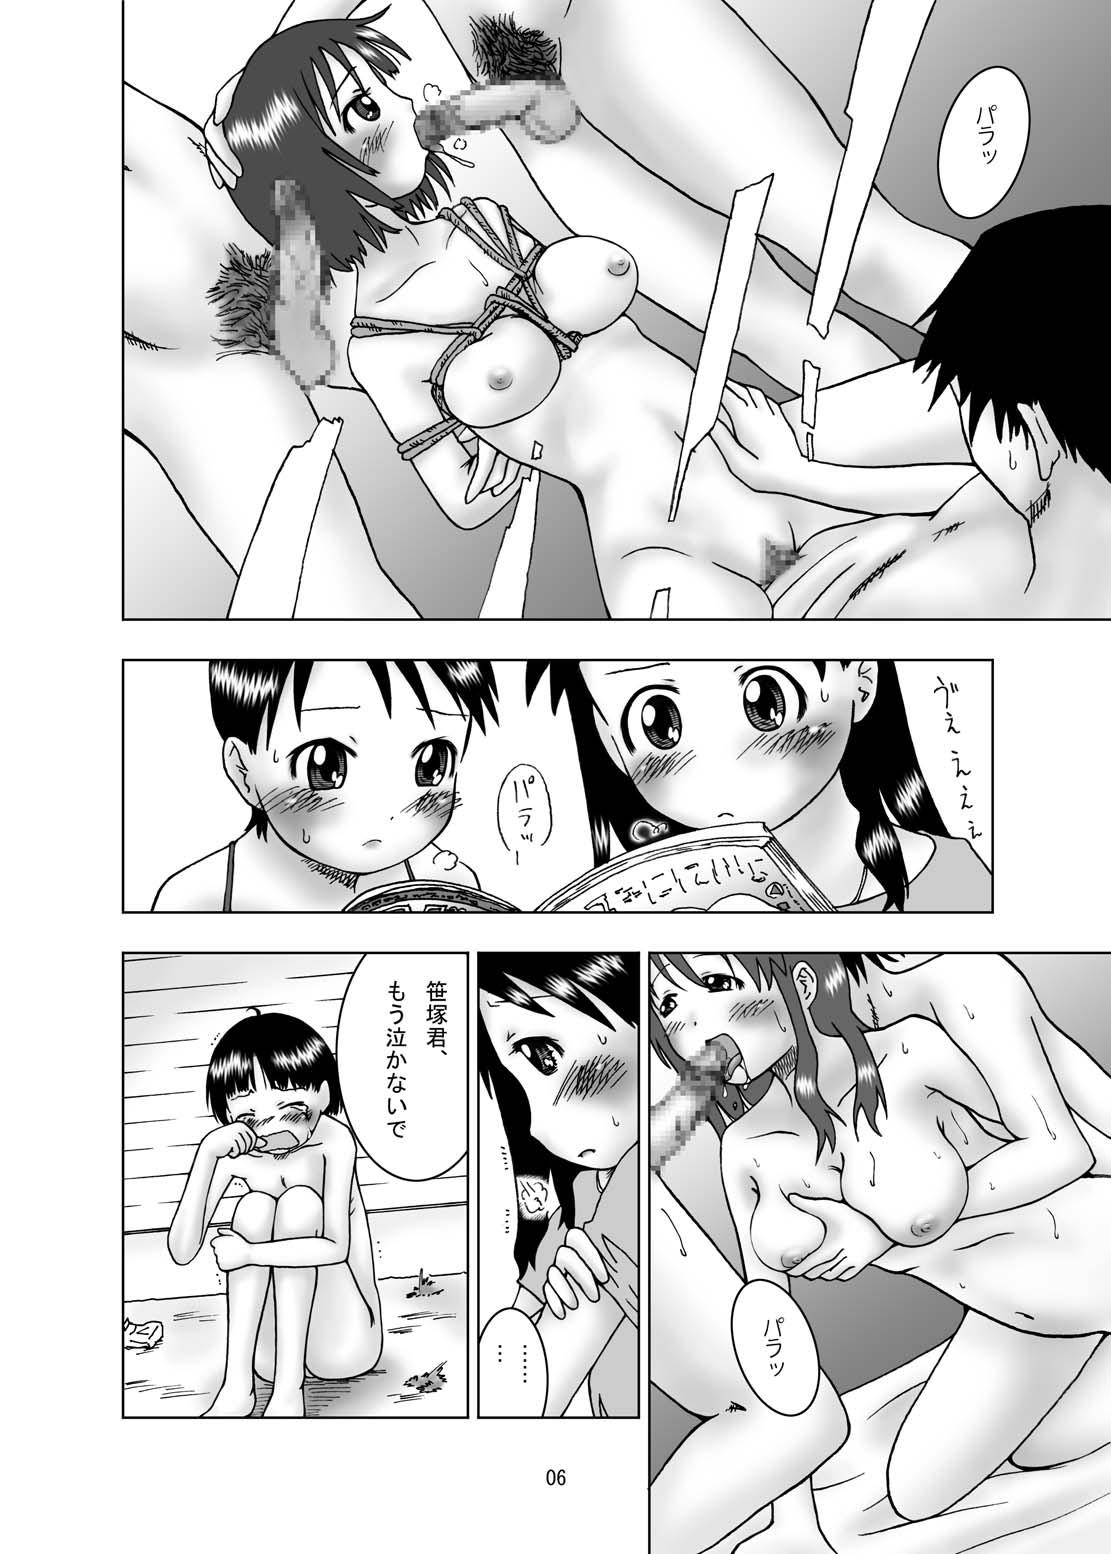 Mofos Aya x Haya - Yotsubato T Girl - Page 6